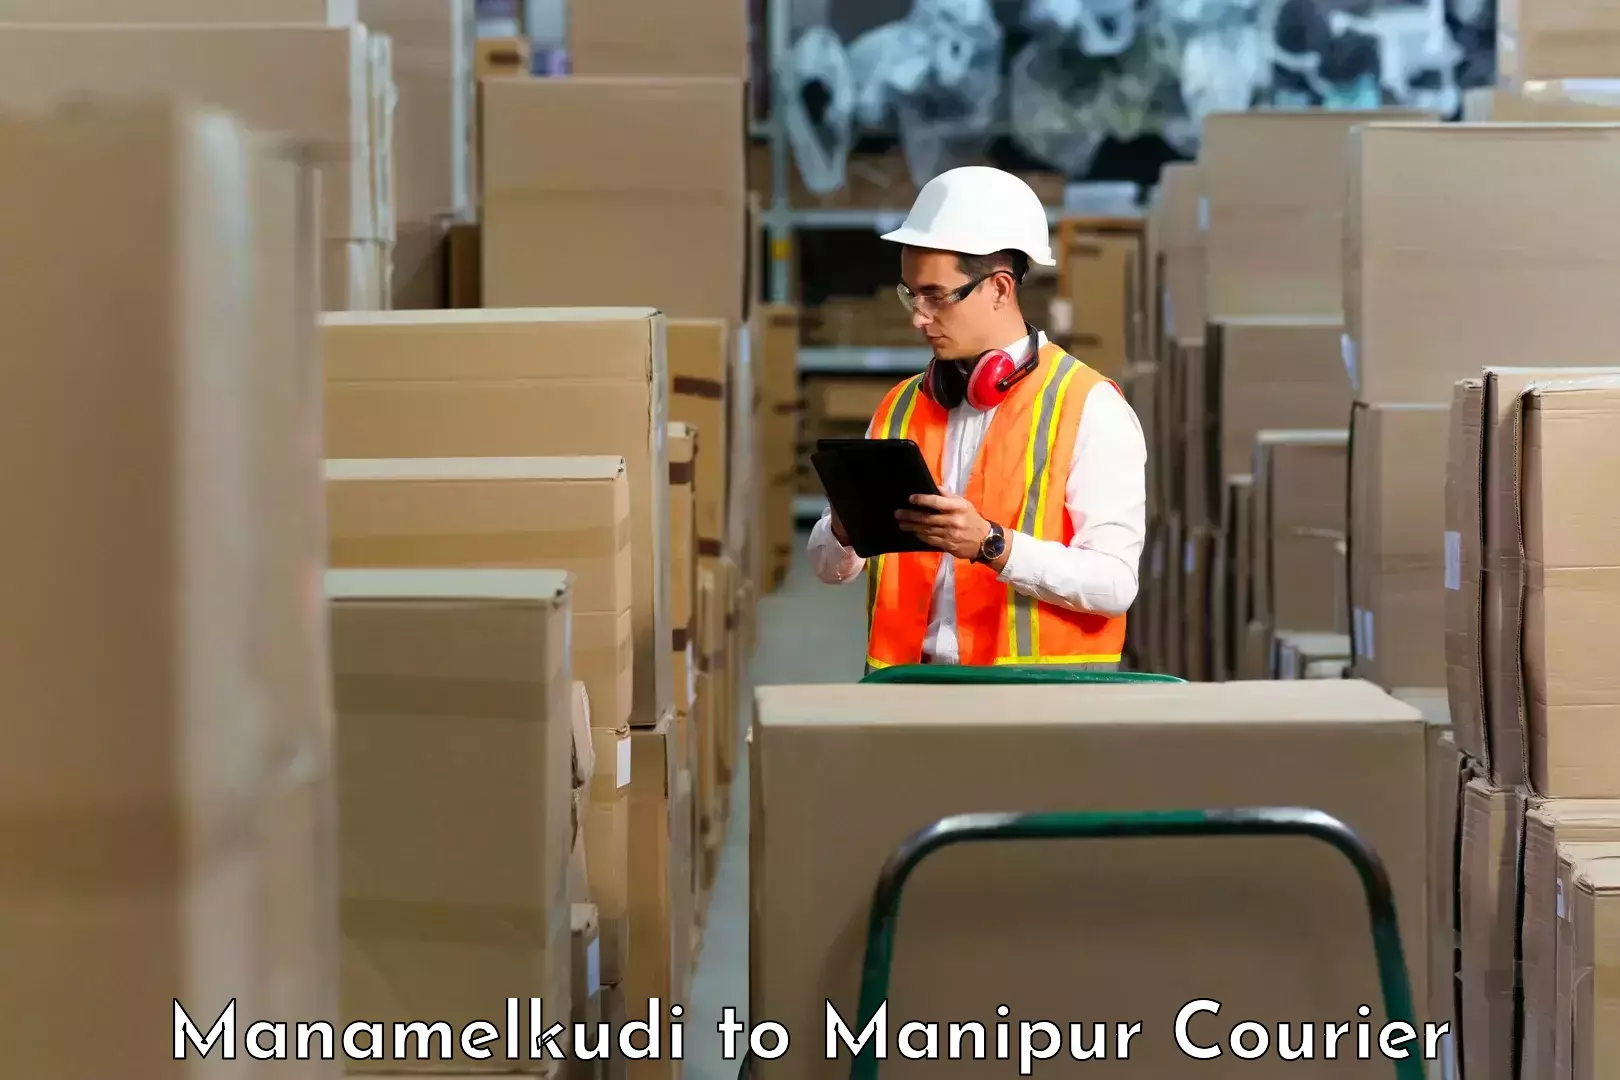 Advanced delivery network Manamelkudi to Ukhrul